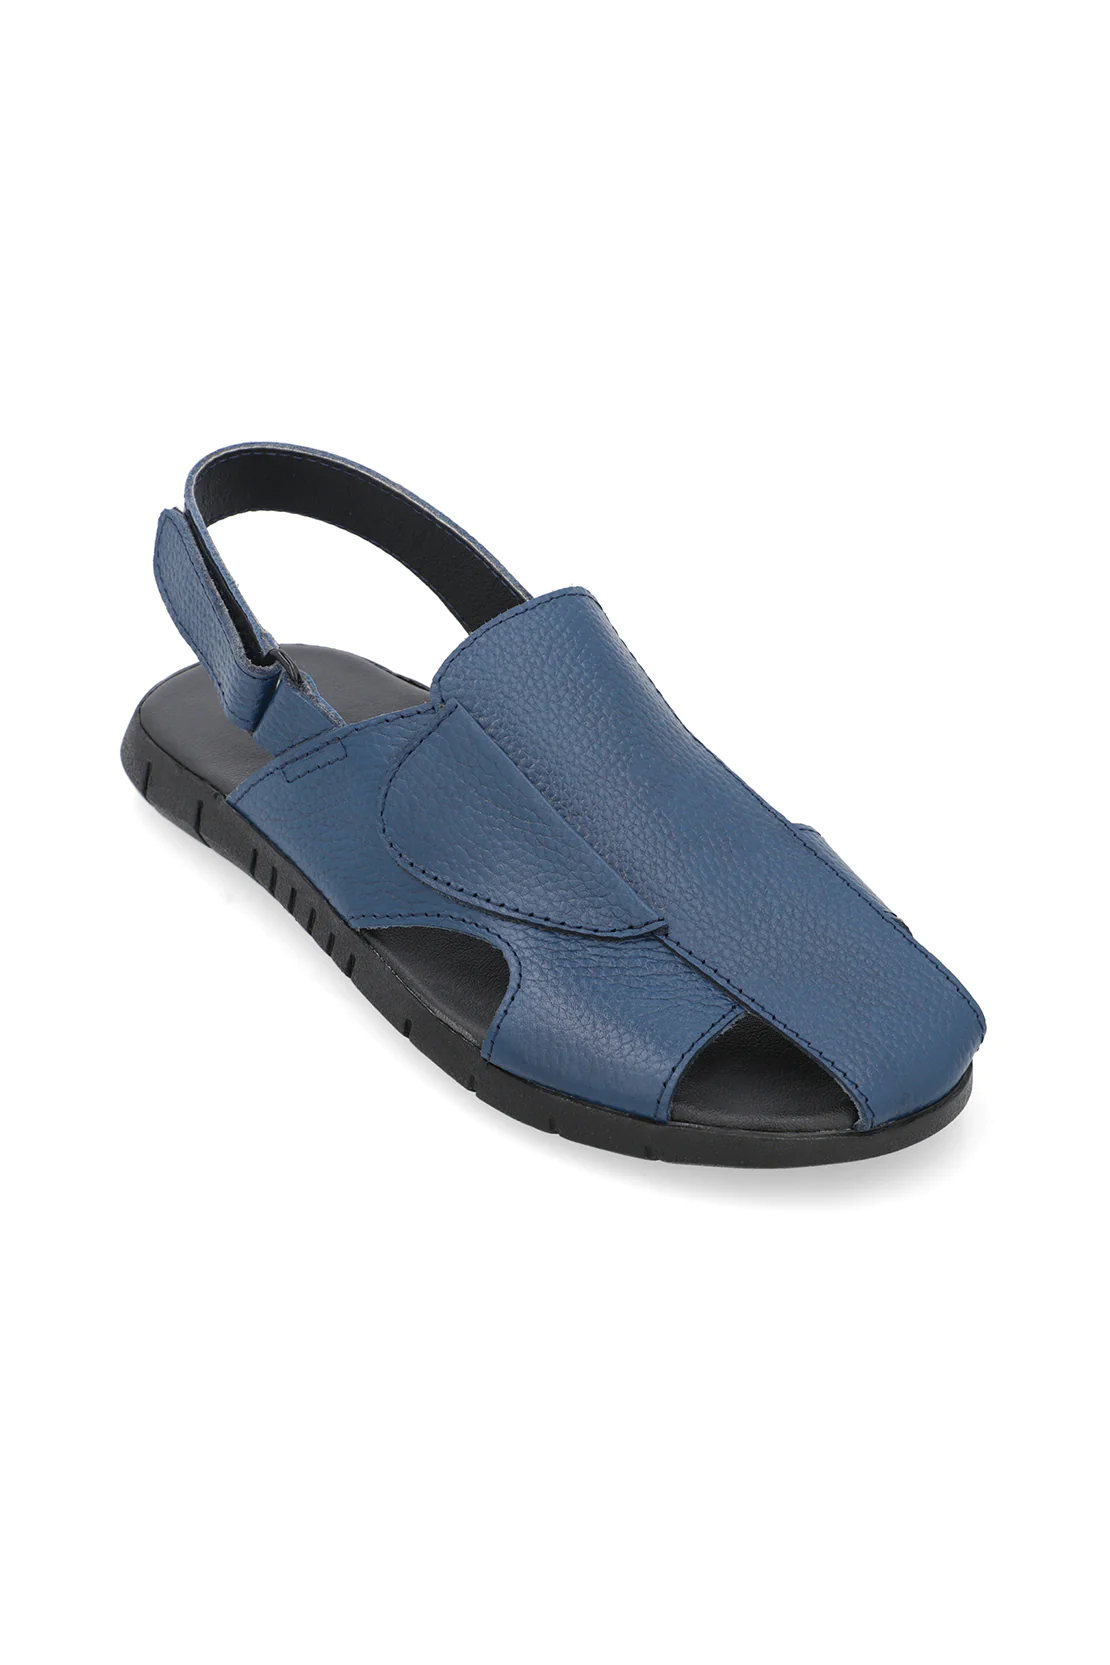 Blue-Sandal-H00880-005